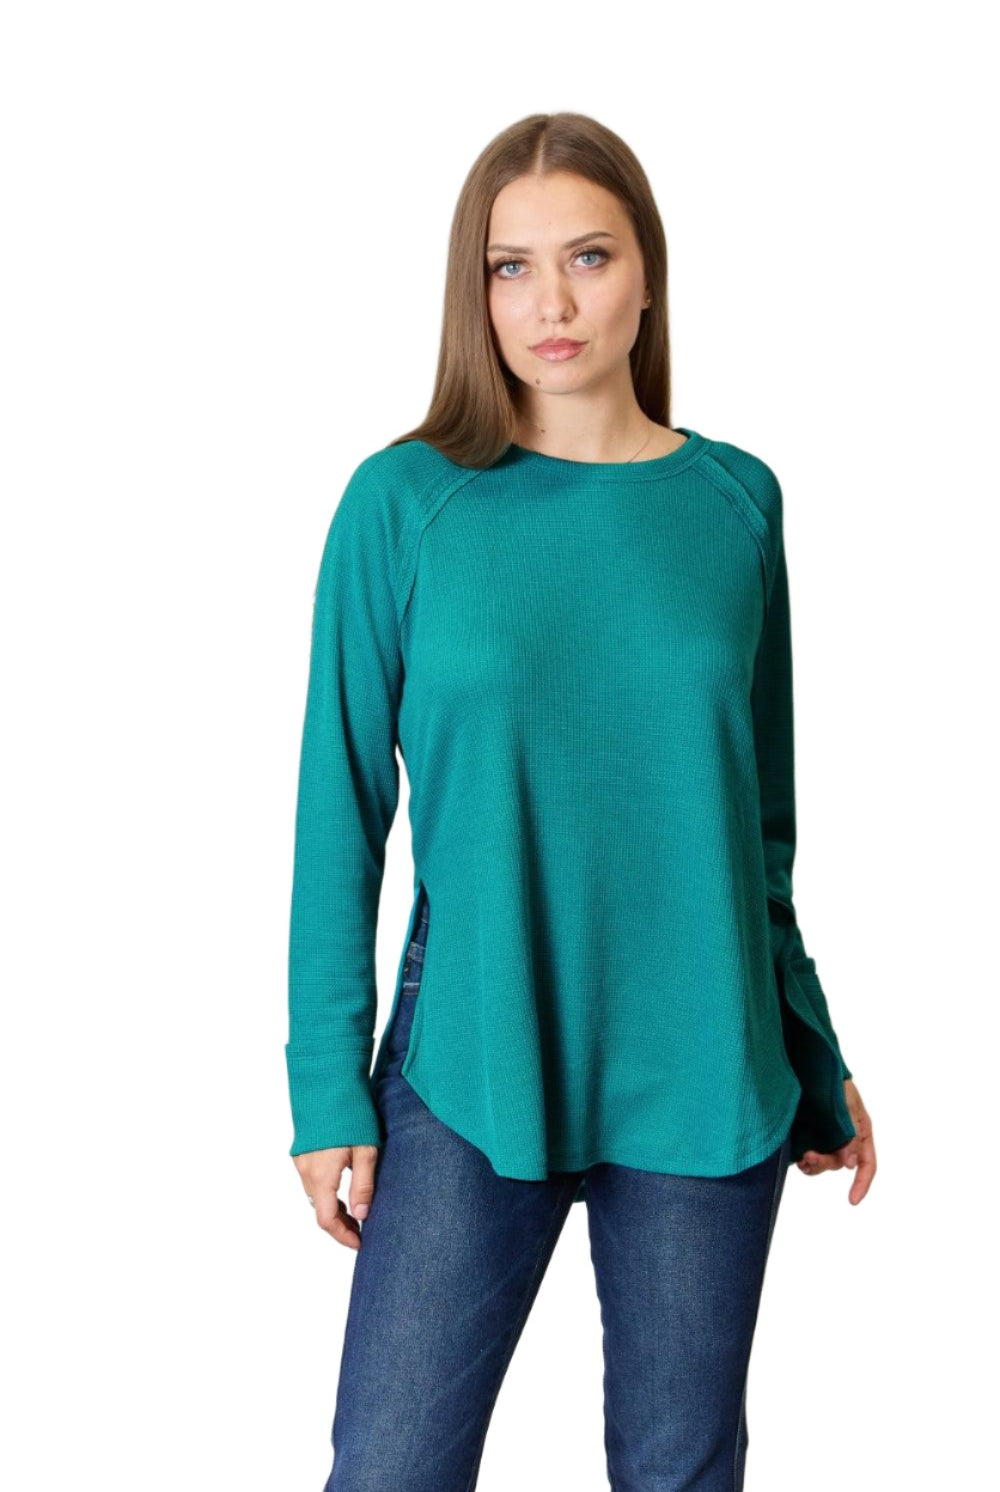 Women's Shirts Zenana Round Neck Long Sleeve Slit Top